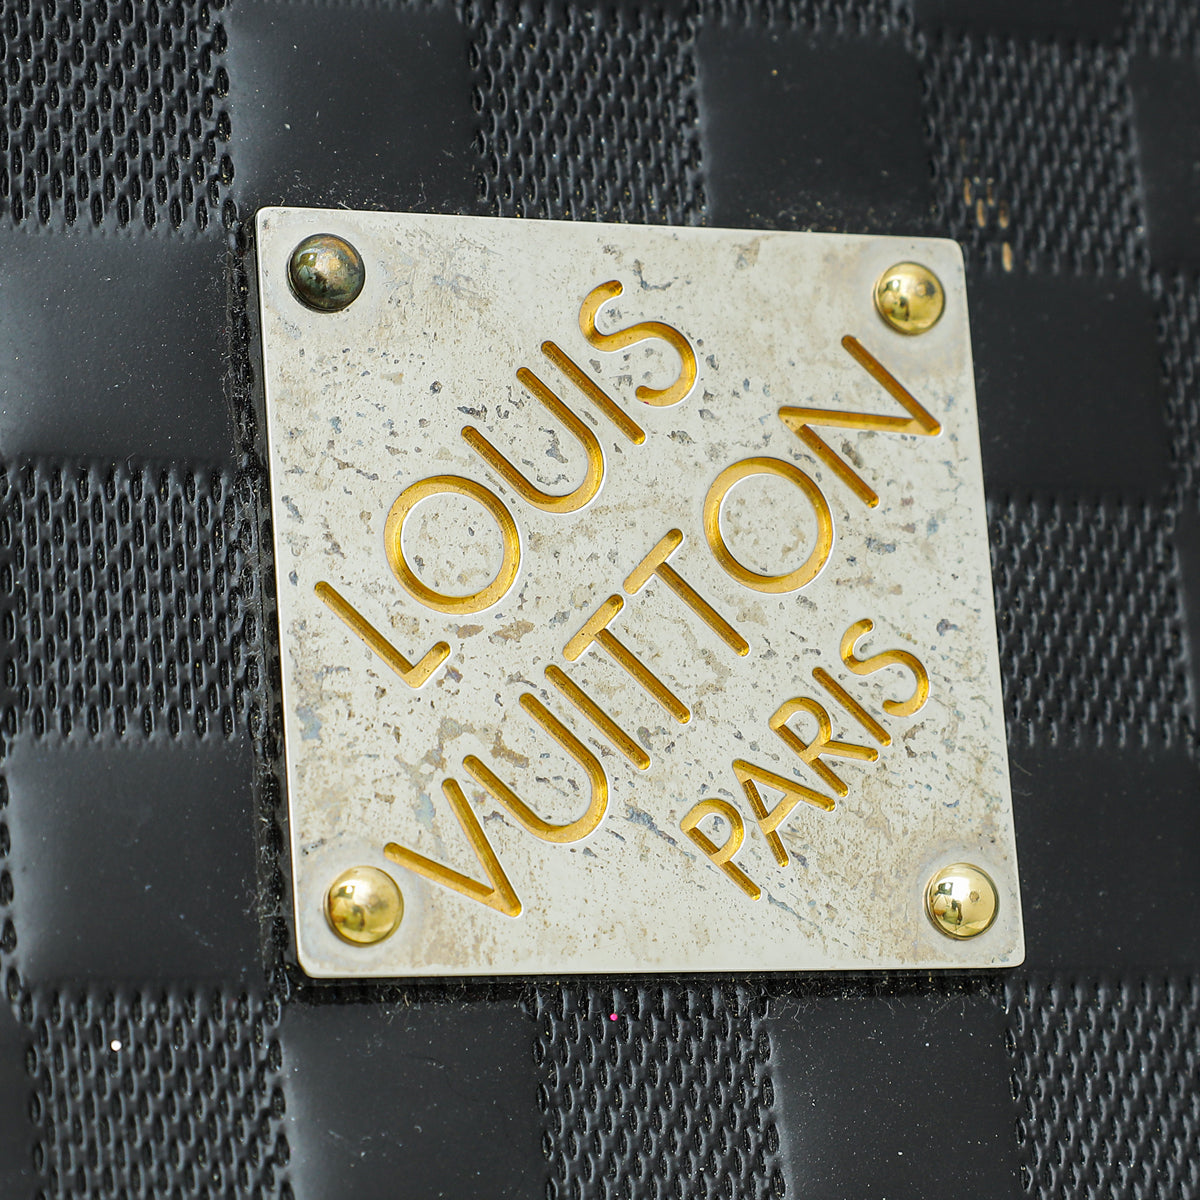 Louis Vuitton Damier Vernis Cabaret Bag